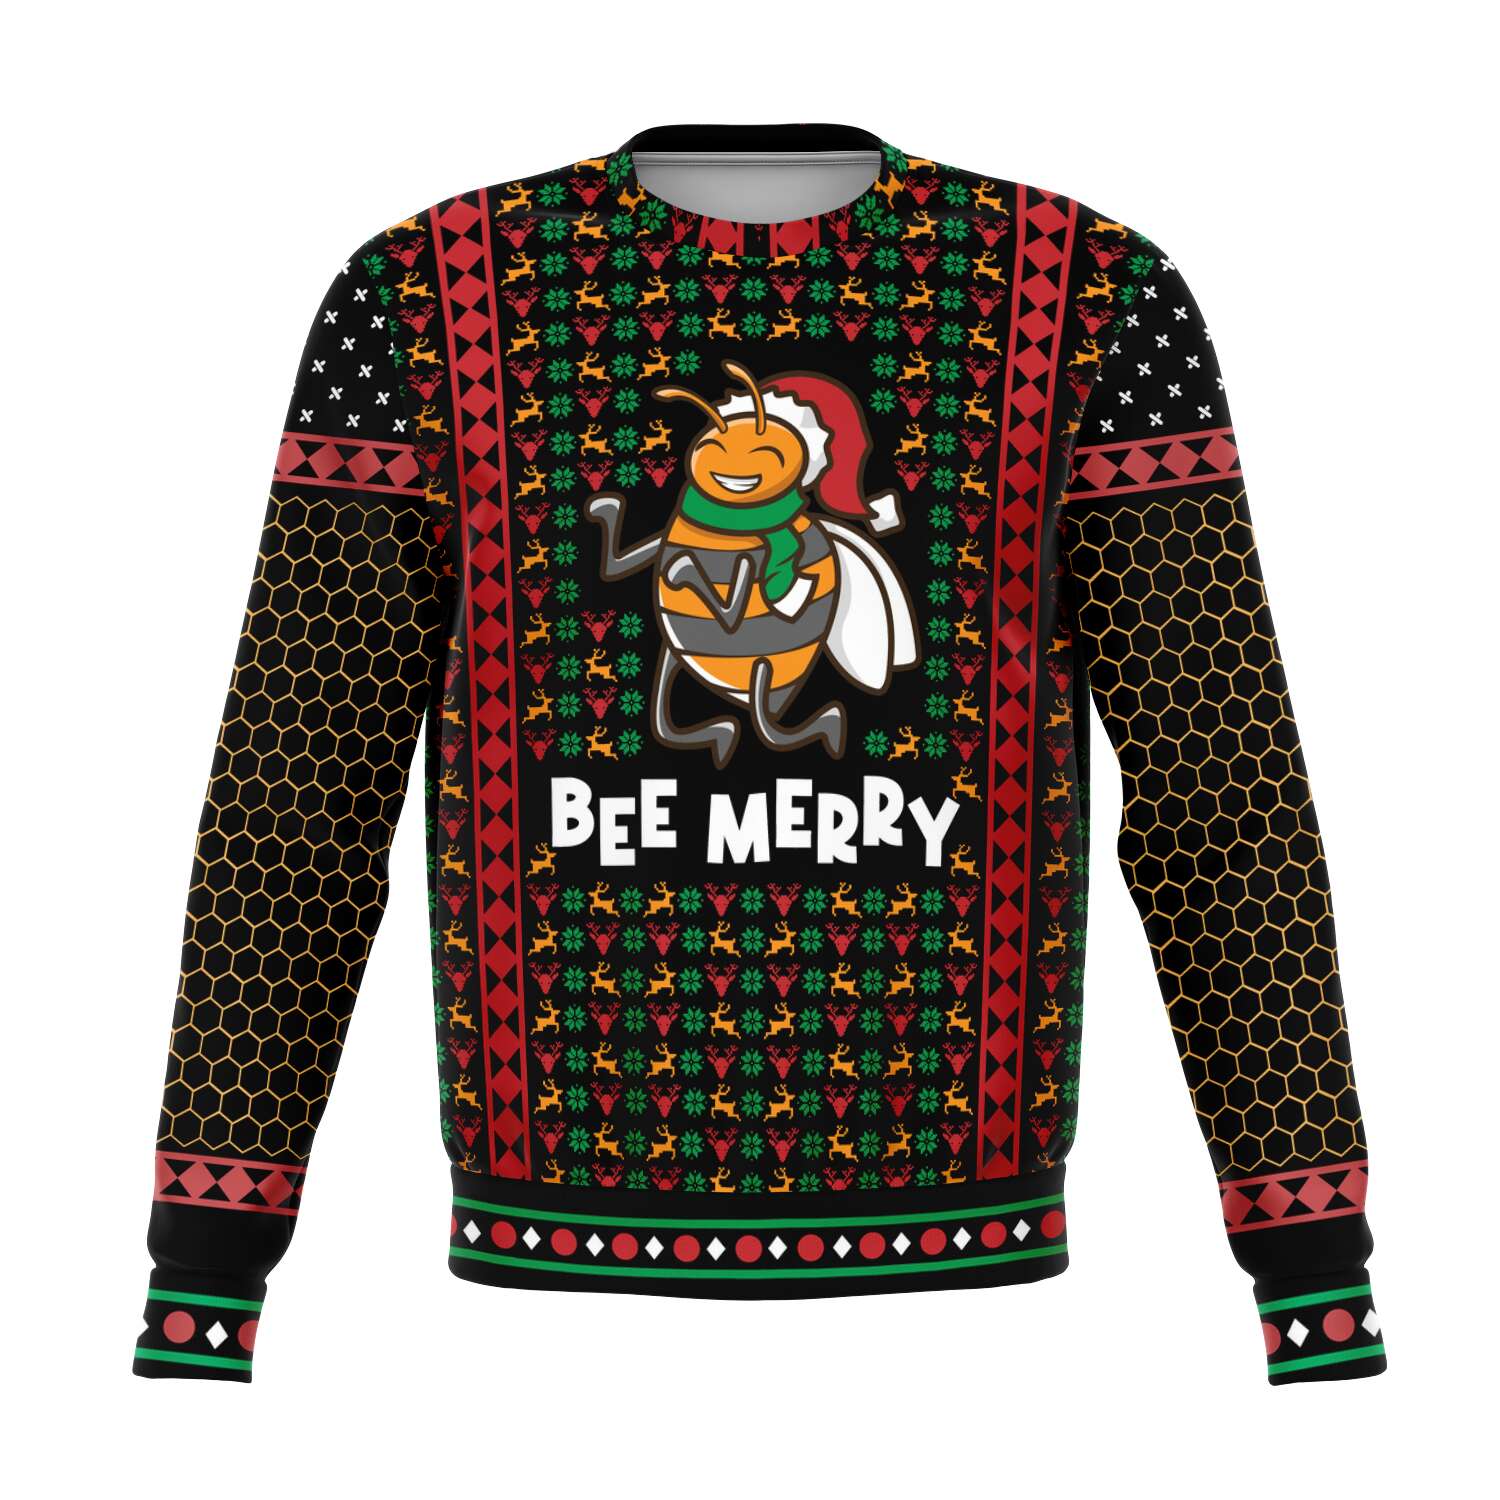 Bee Merry Sweatshirt | Unisex Ugly Christmas Sweater, Xmas Sweater, Holiday Sweater, Festive Sweater, Funny Sweater, Funny Party Shirt